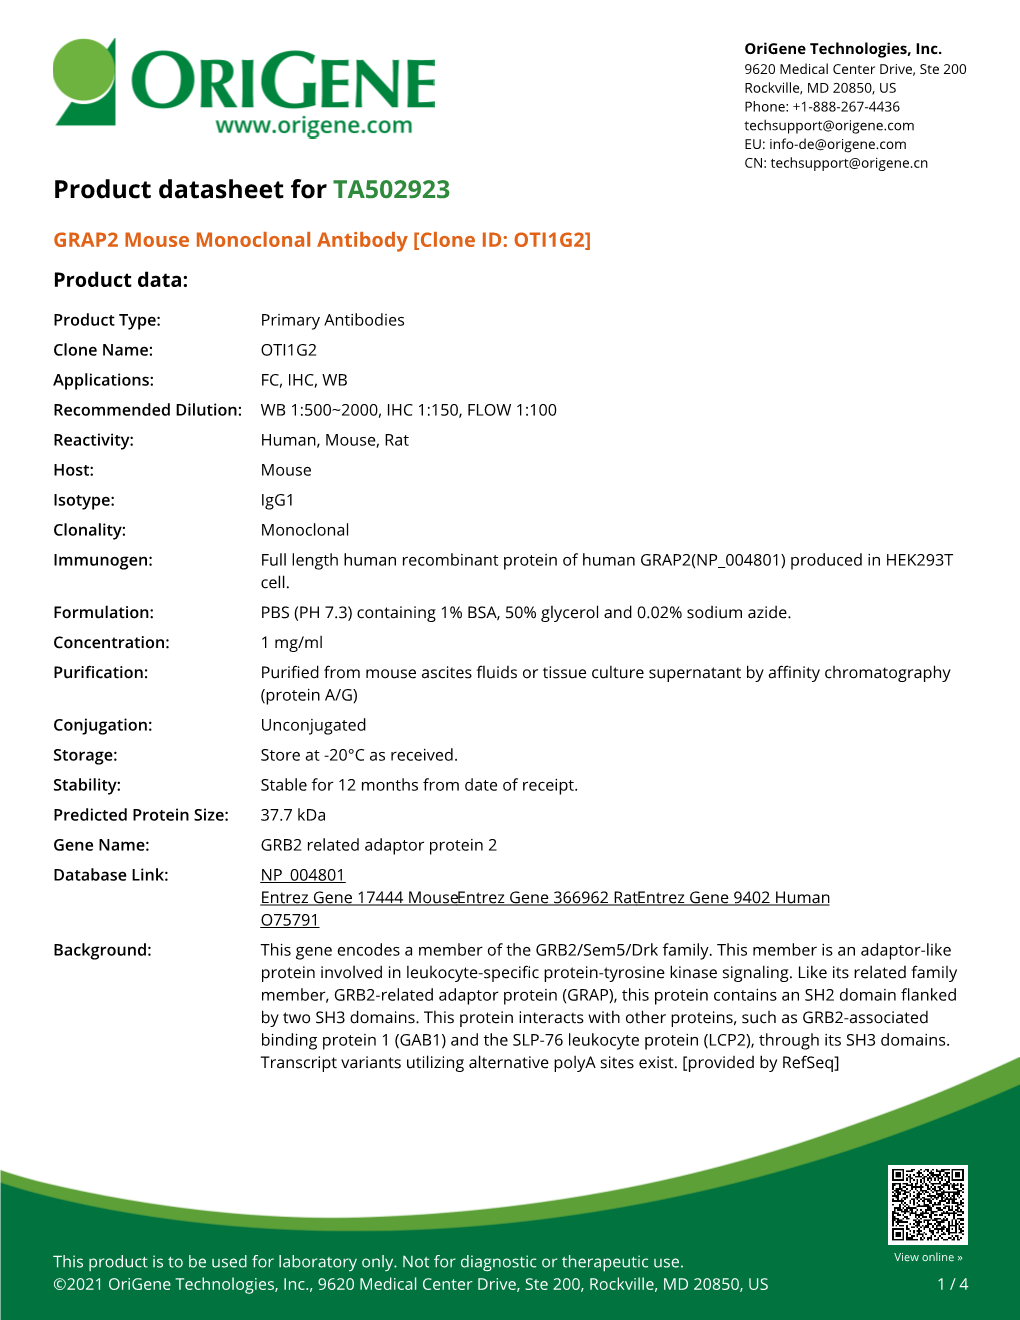 GRAP2 Mouse Monoclonal Antibody [Clone ID: OTI1G2] Product Data